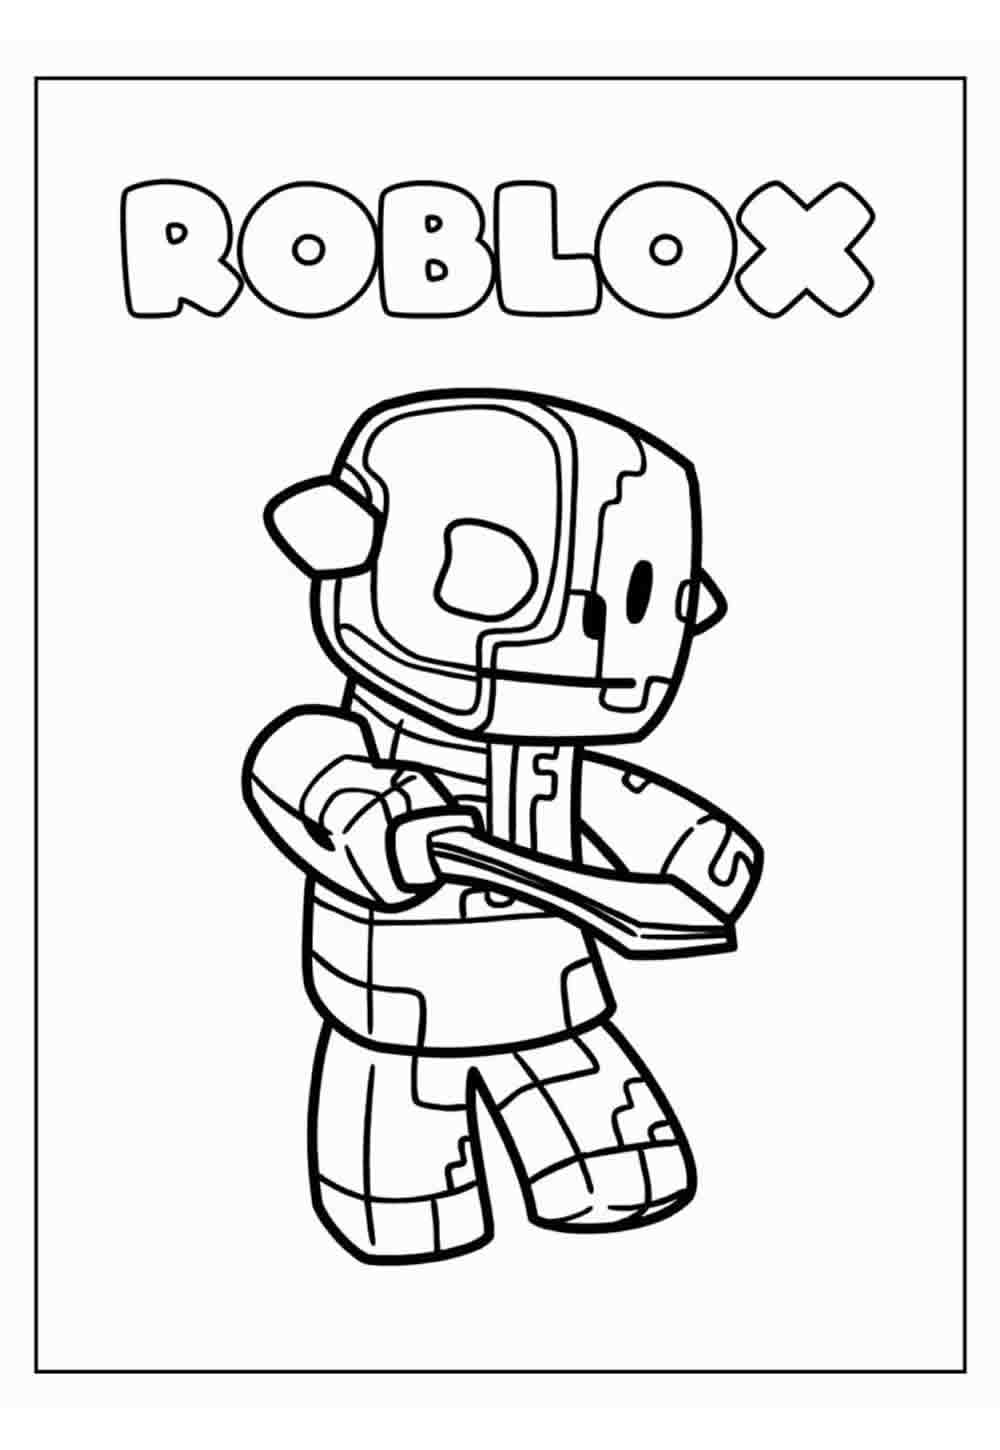 Desenho Educativo de Roblox para colorir